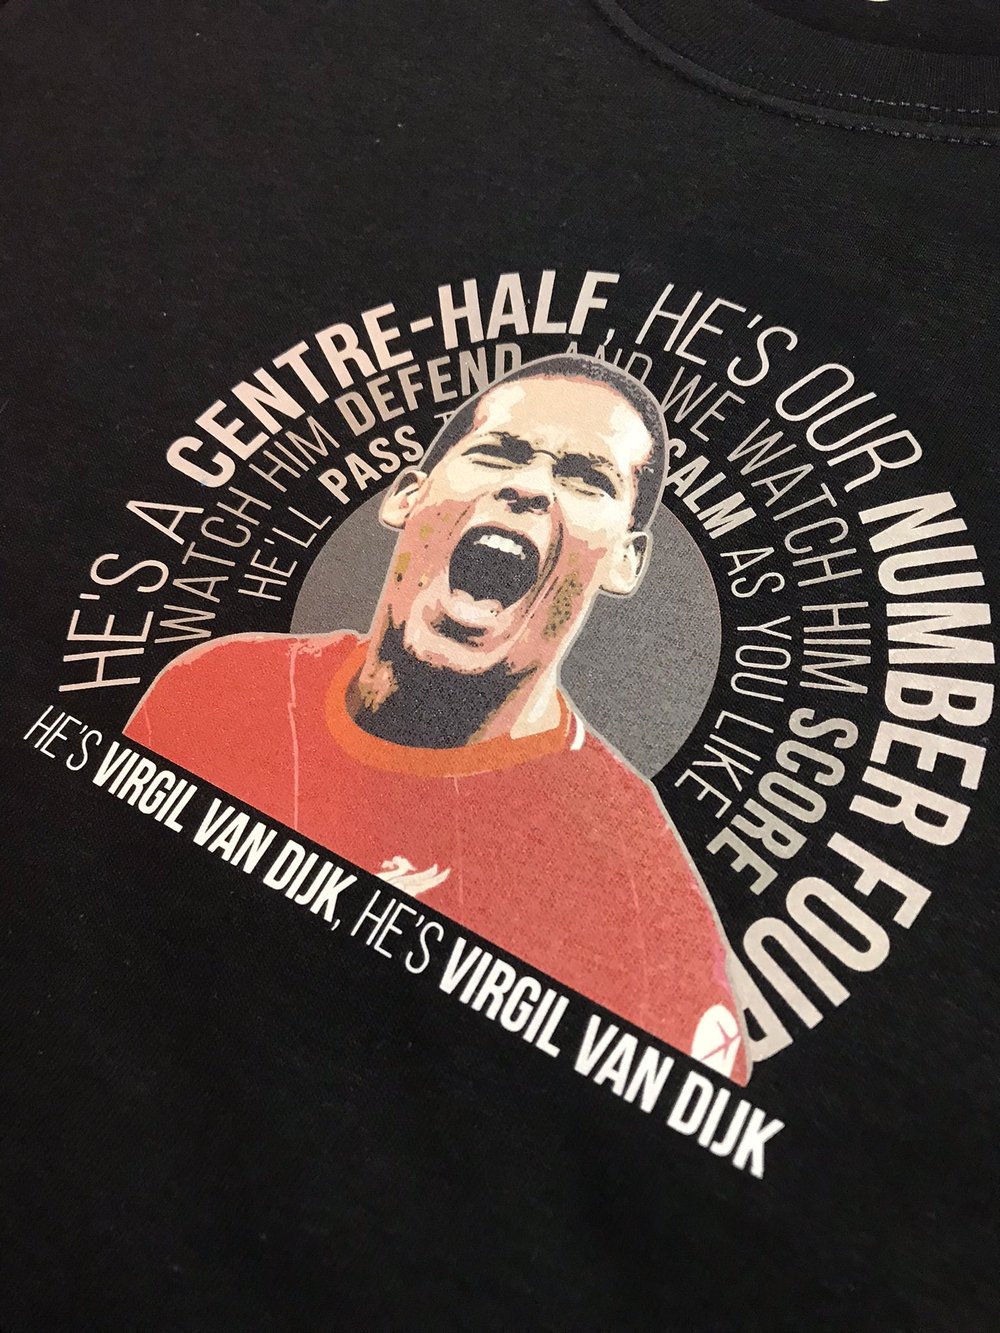 Calm as you like - Virgil van Dijk T-shirt